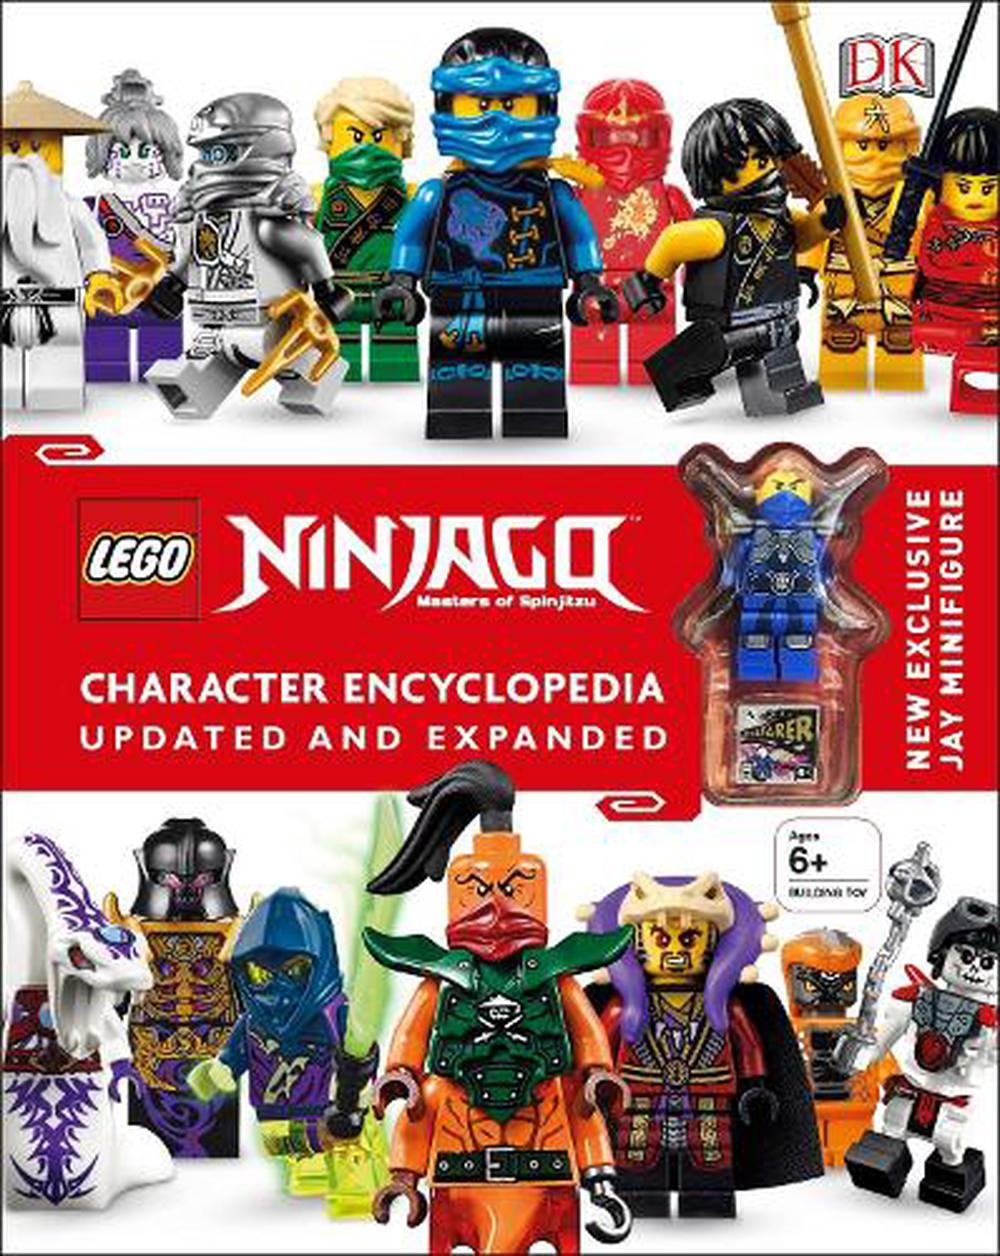 Lego Ninjago Character Encyclopedia By Dk Hardcover 9780241232484 Buy Online At The Nile - roblox character encyclopedia nz